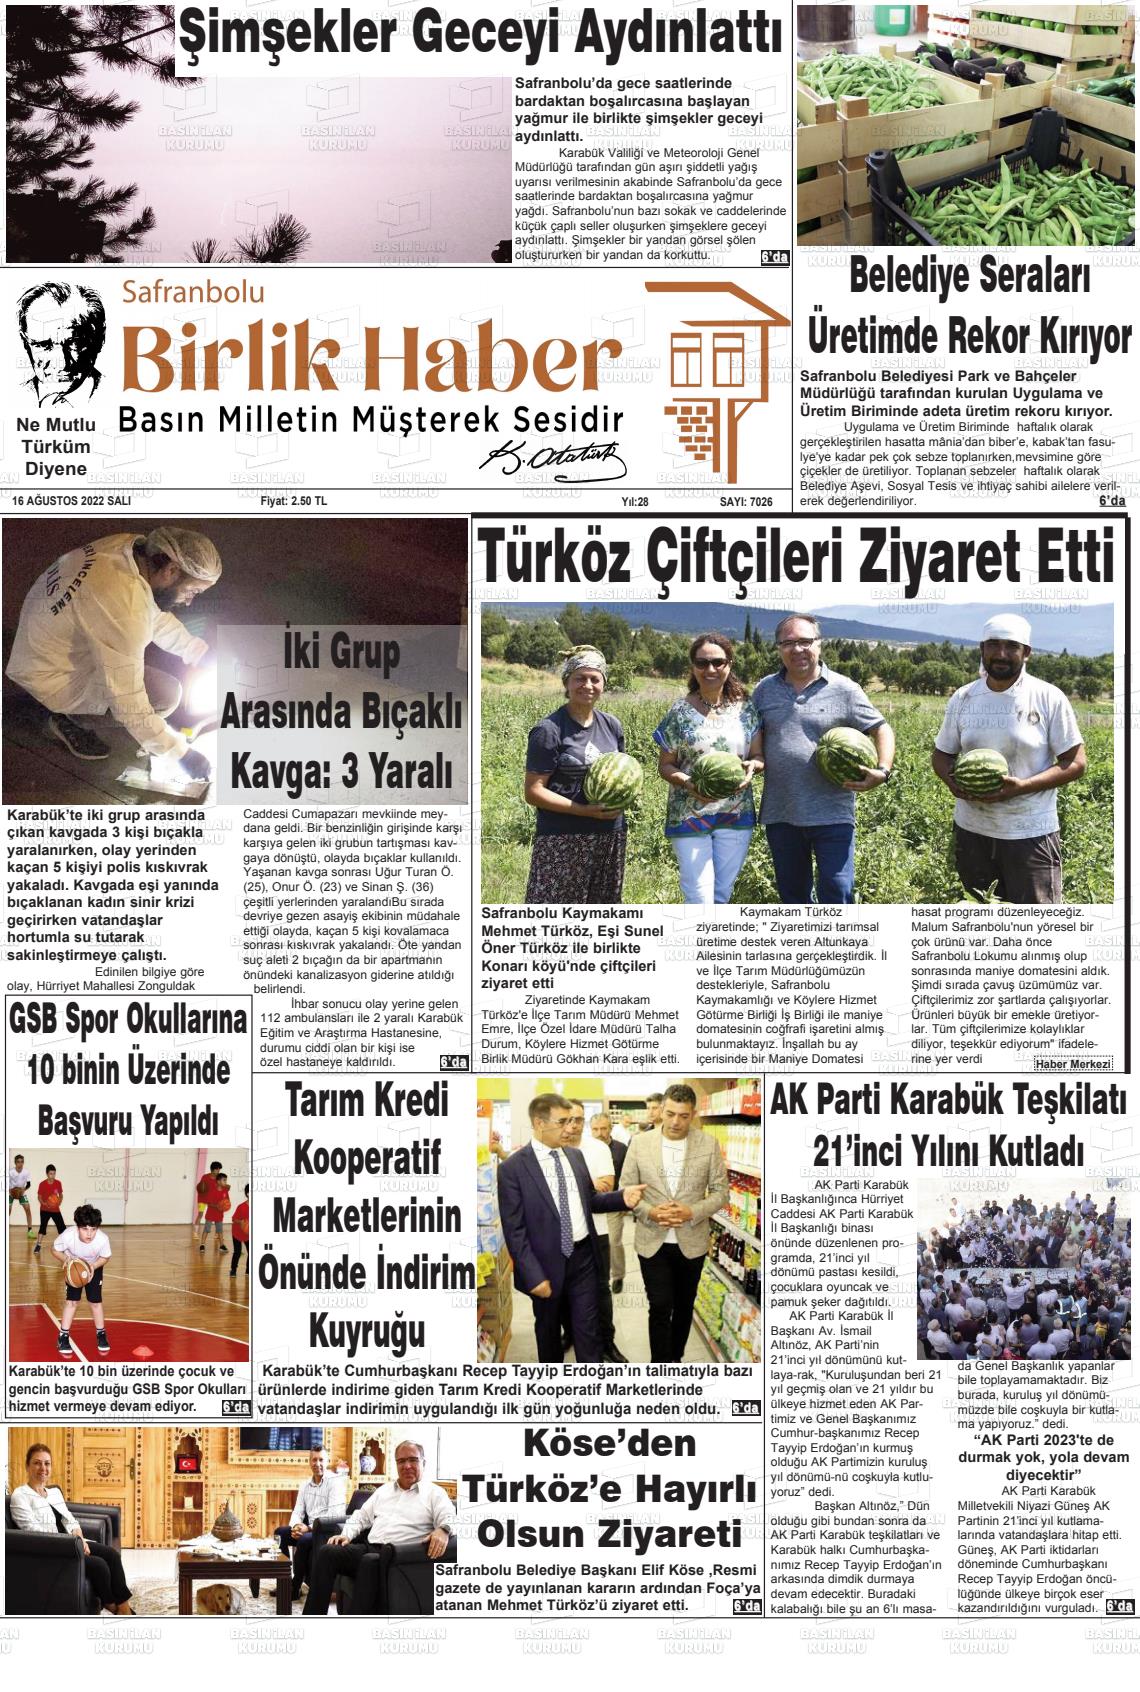 16 Ağustos 2022 Safranboluda Sonsöz Gazete Manşeti